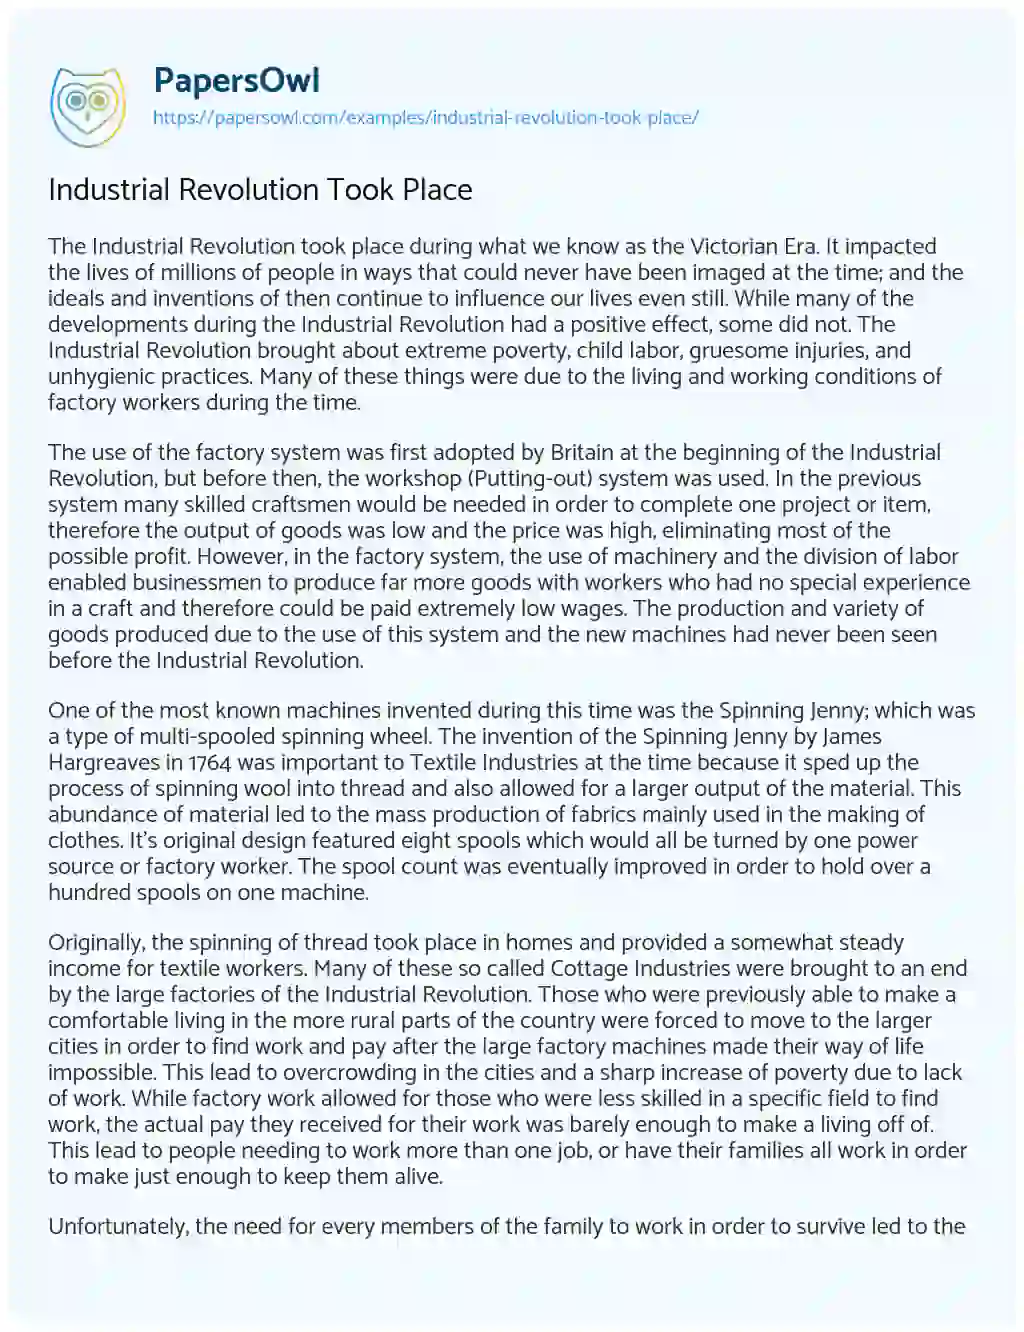 Industrial Revolution Took Place essay